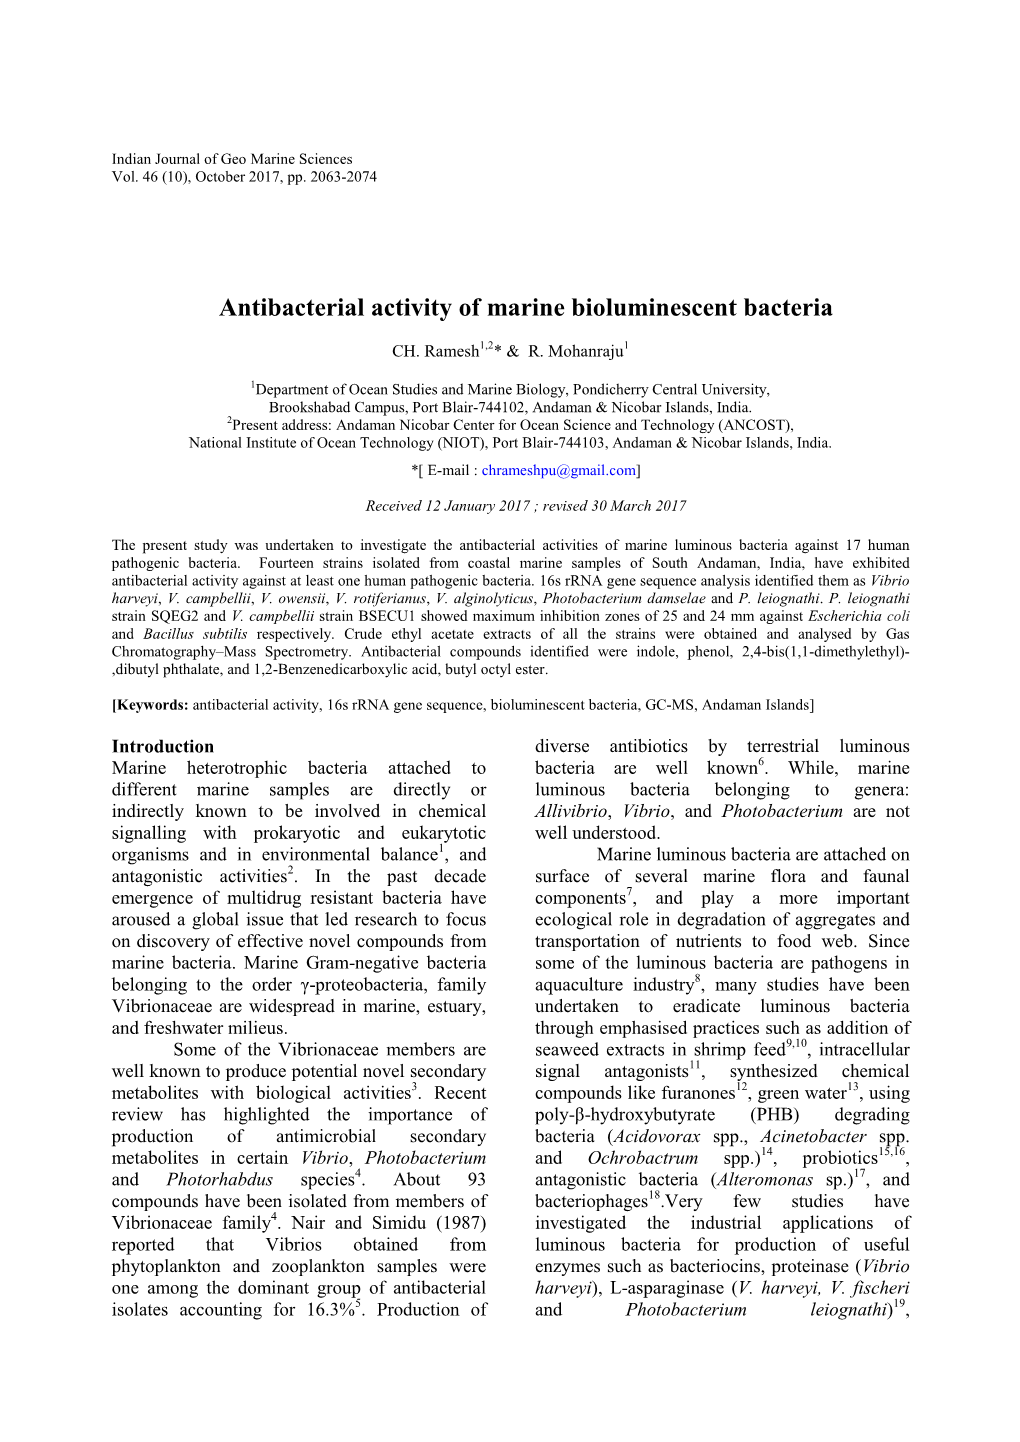 Antibacterial Activity of Marine Bioluminescent Bacteria